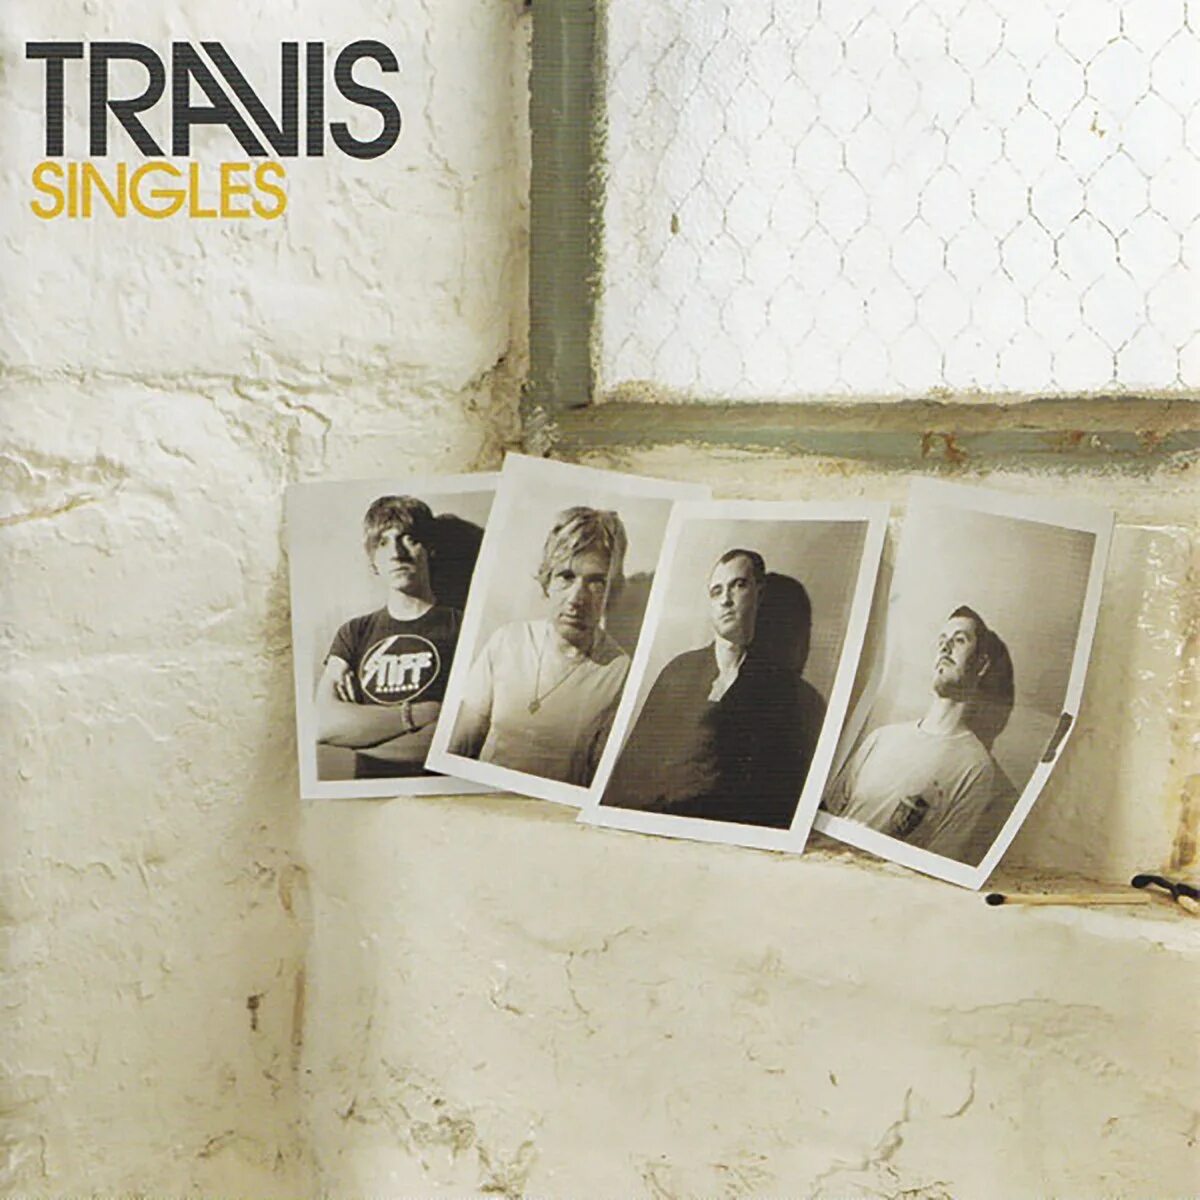 Singles альбом. Travis Side. Travis. Singles CD обложка. Travis Sing. Travis album.